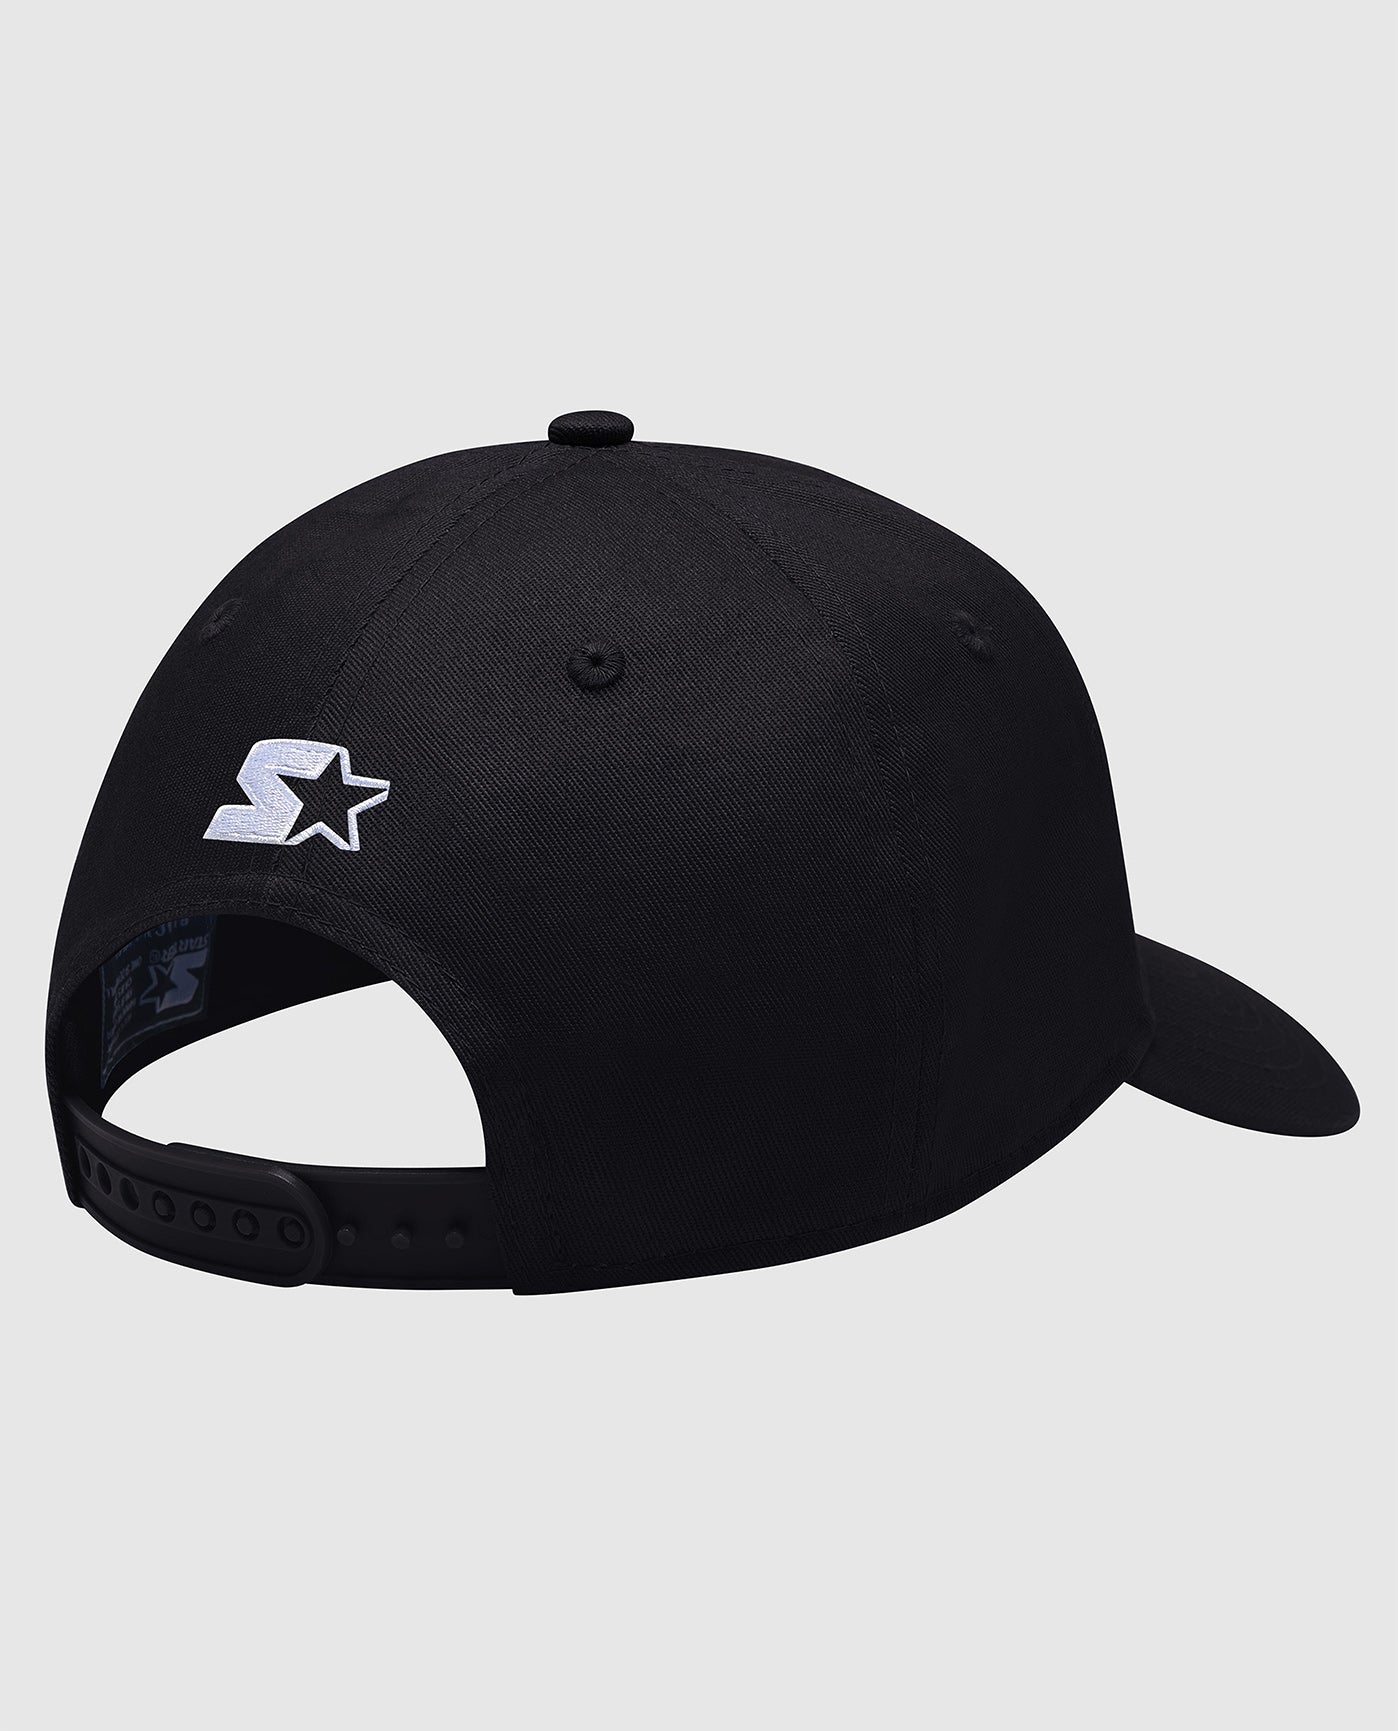 Men's Black Starter Breeze Snapback Hat